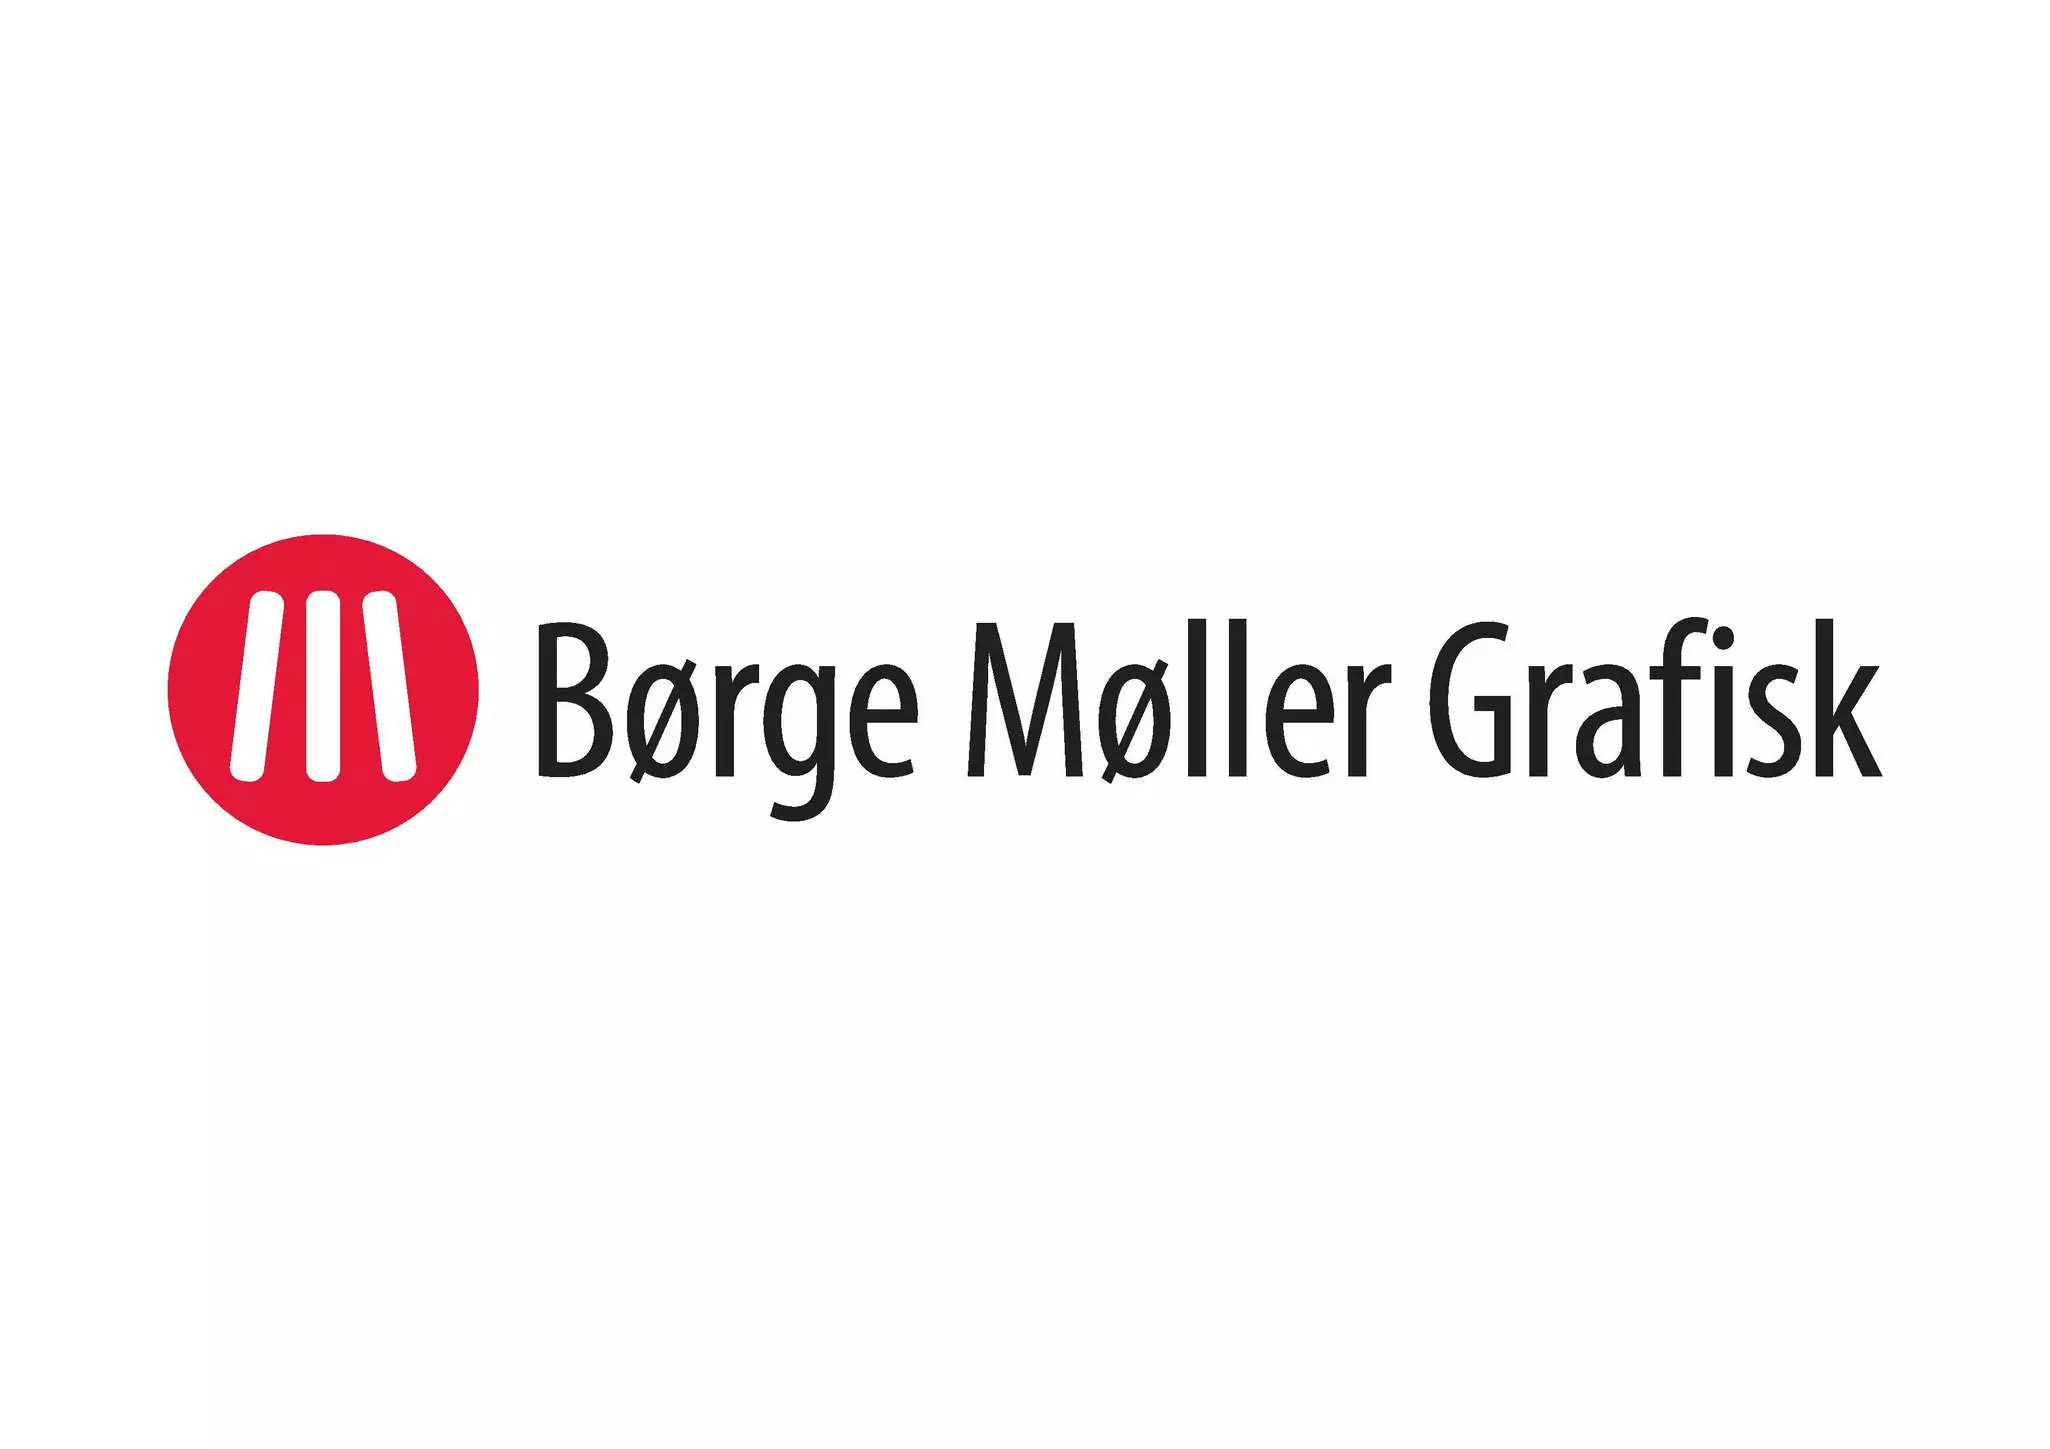 Børge Møller Grafisk logo